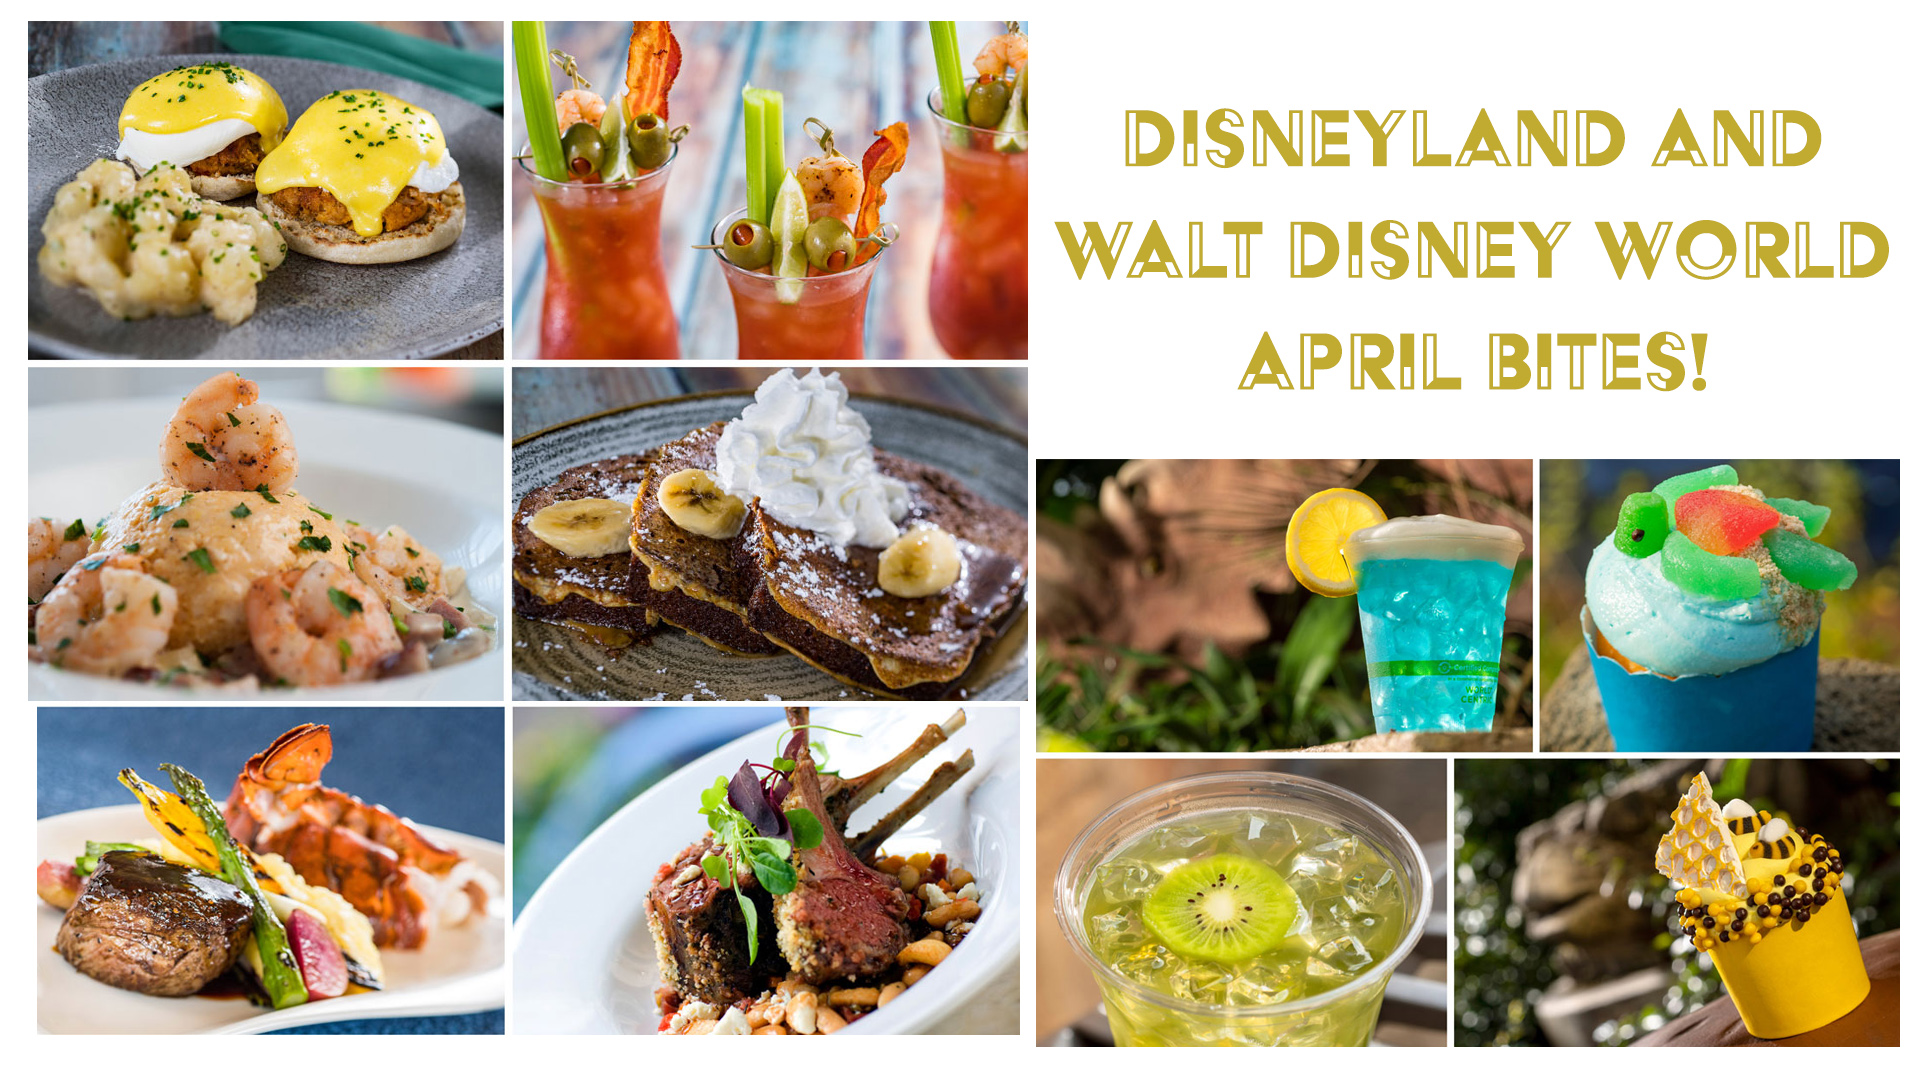 April Food Bites Reveals Upcoming Menu for Blue Bayou and Tasty Treats for Walt Disney World